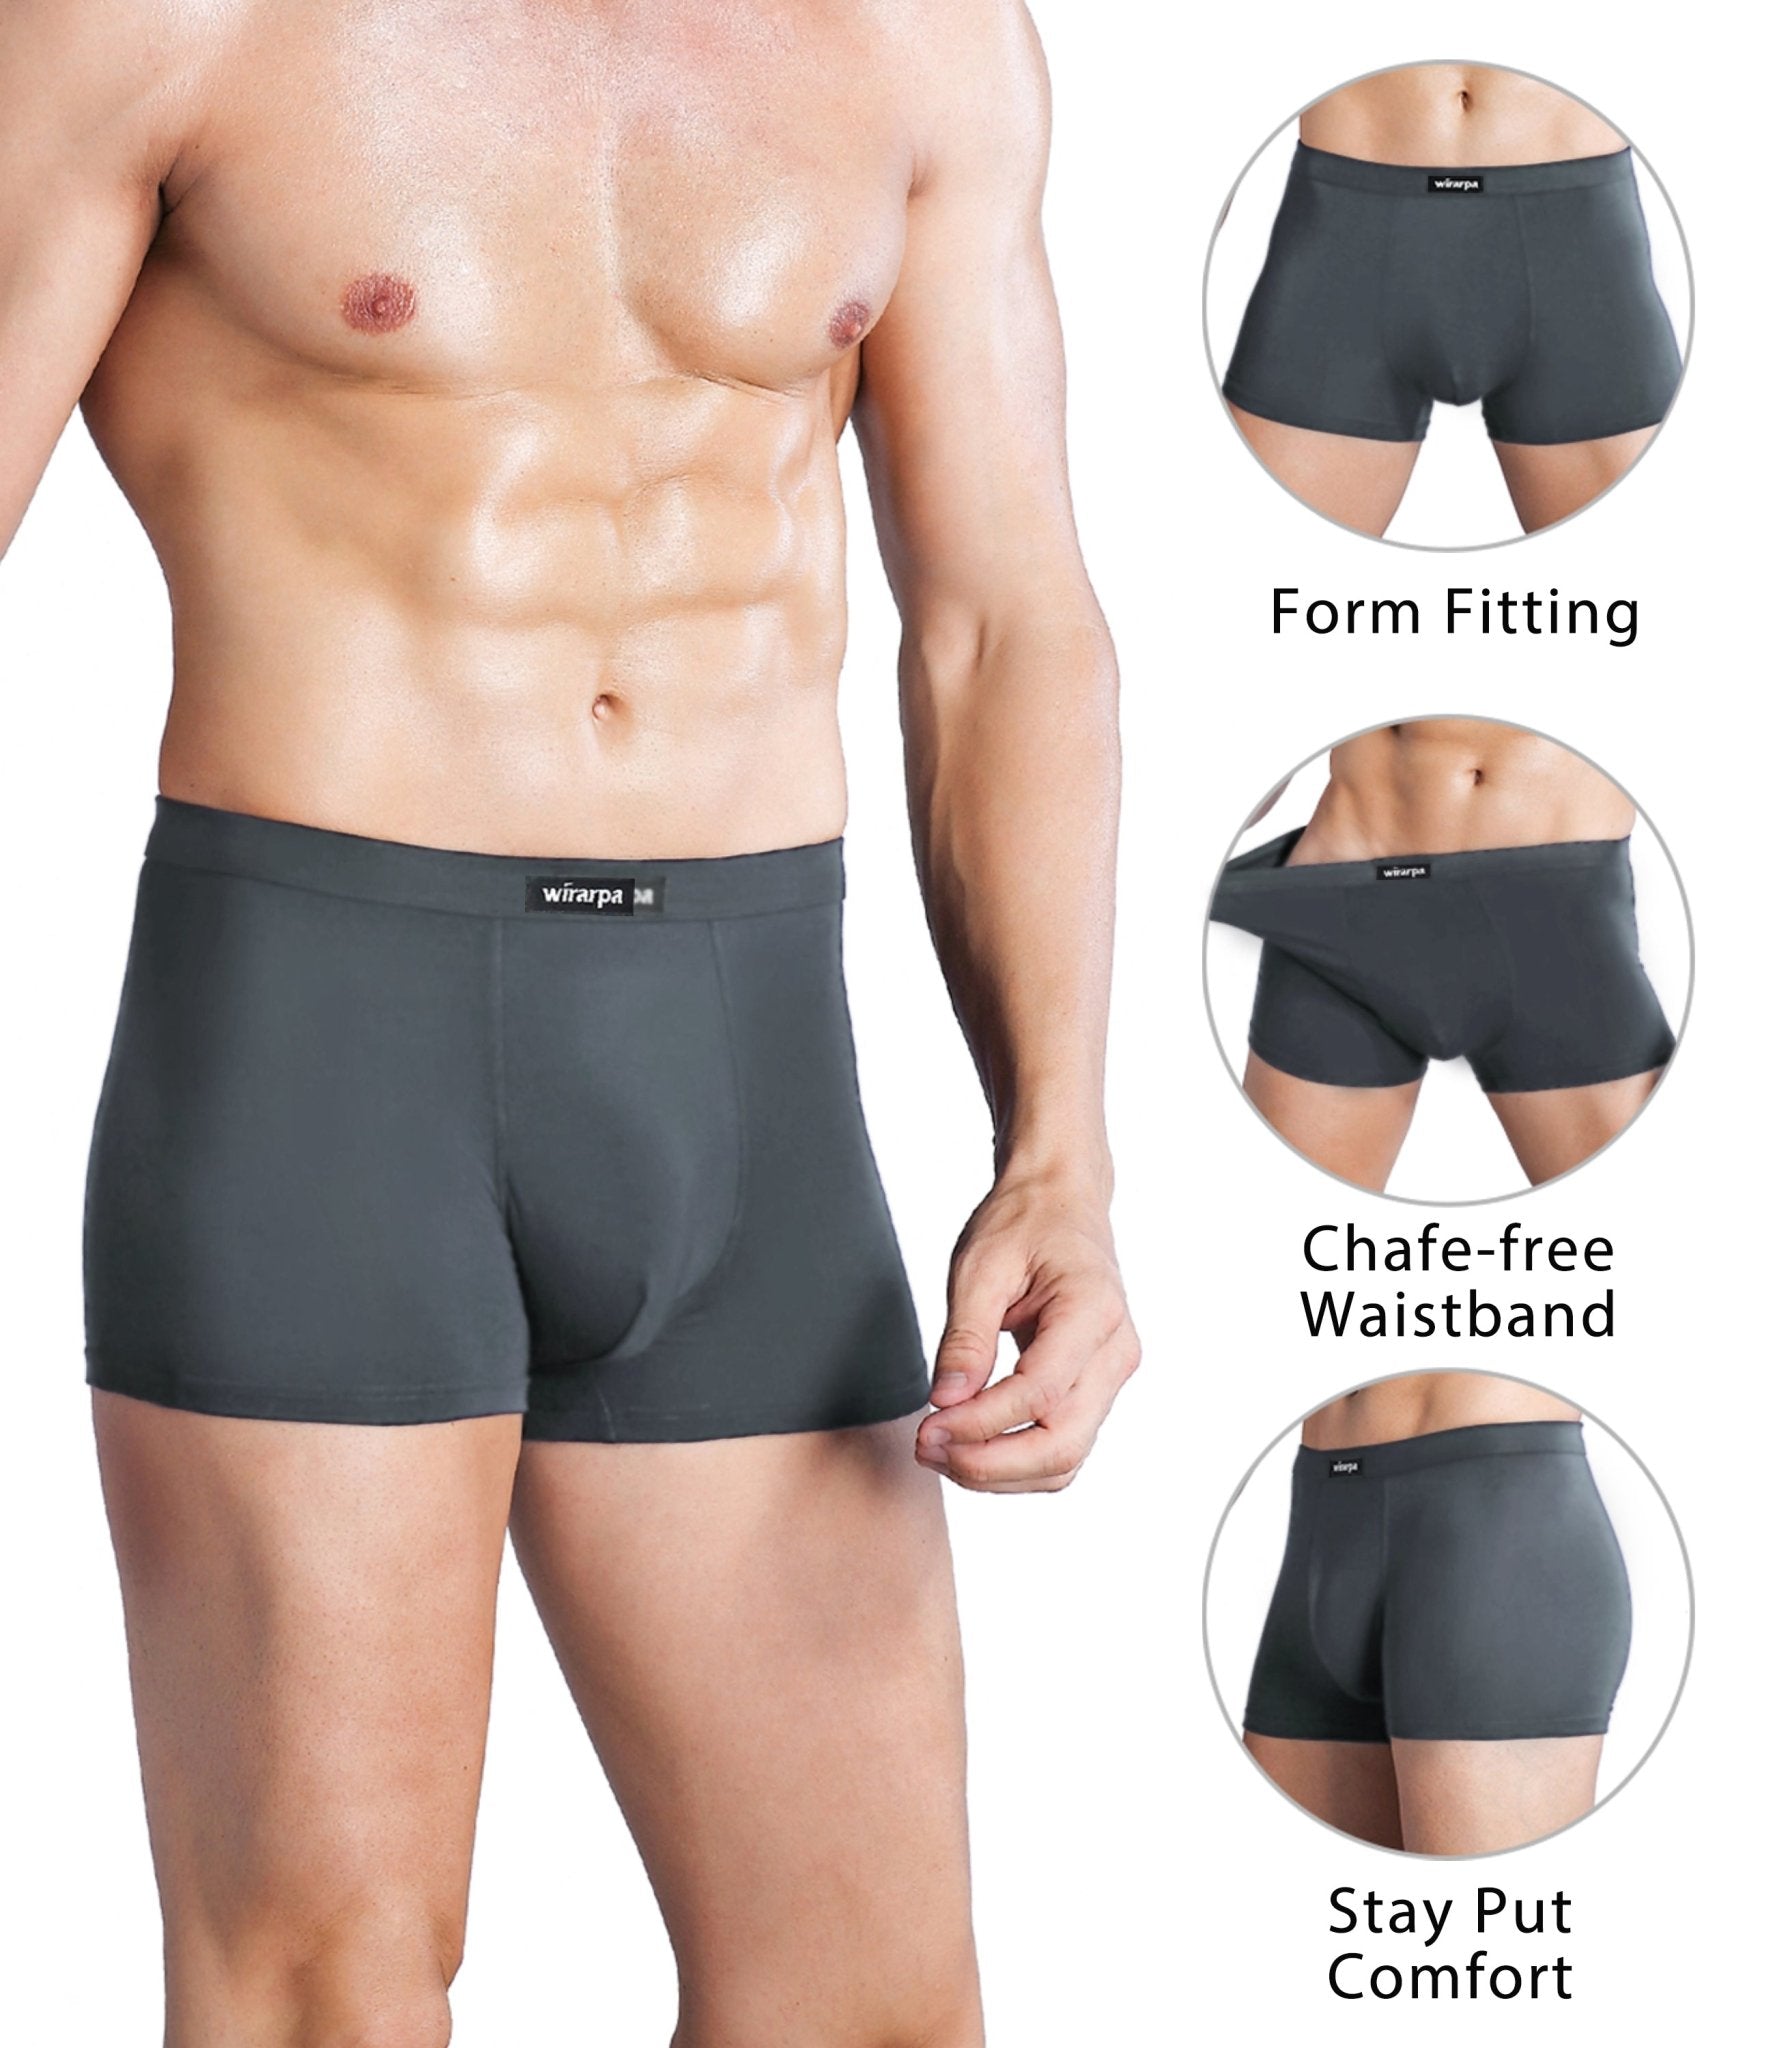 wirarpa Men’s Breathable Viscose Trunk Underwear Solid 4 Pack - Wirarpa Apparel, Inc.